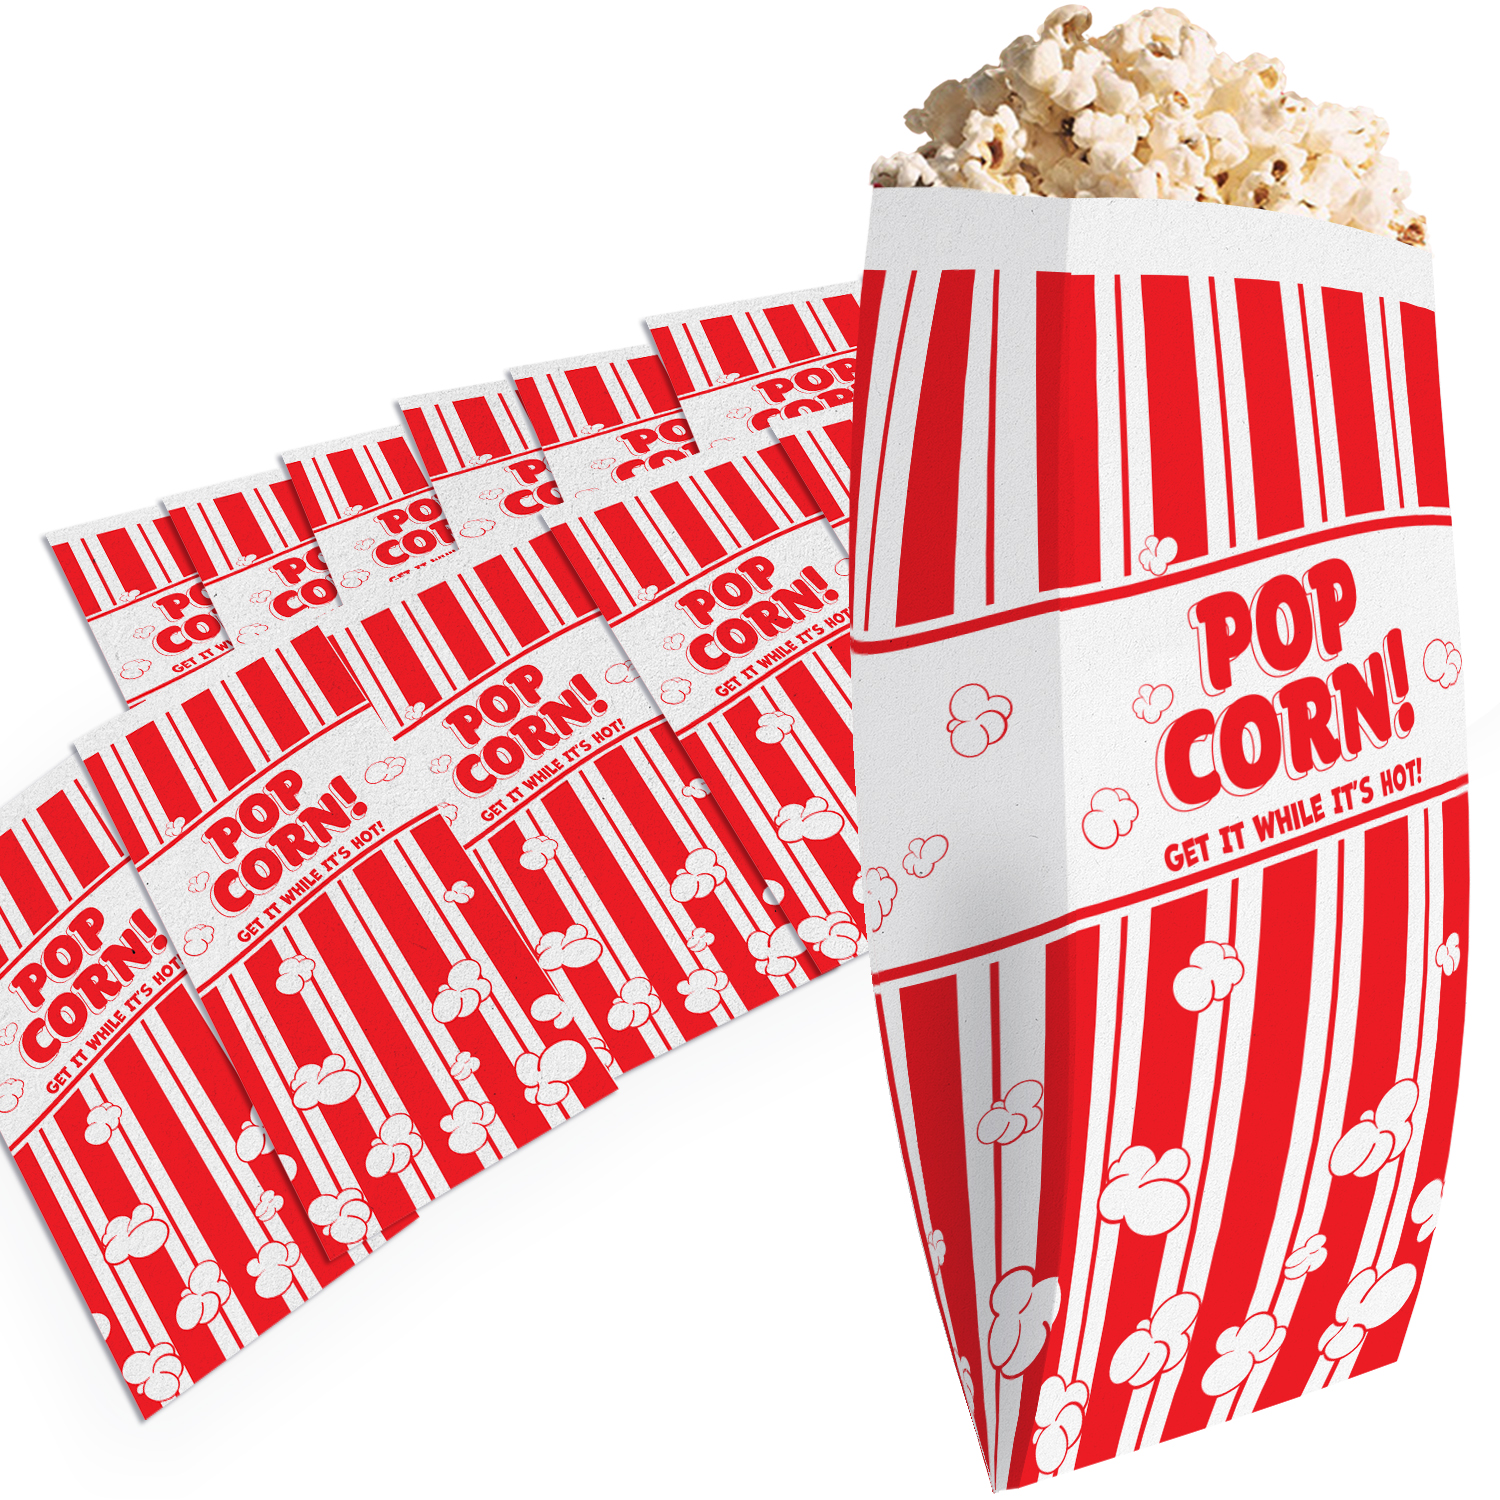 Cot popcorn